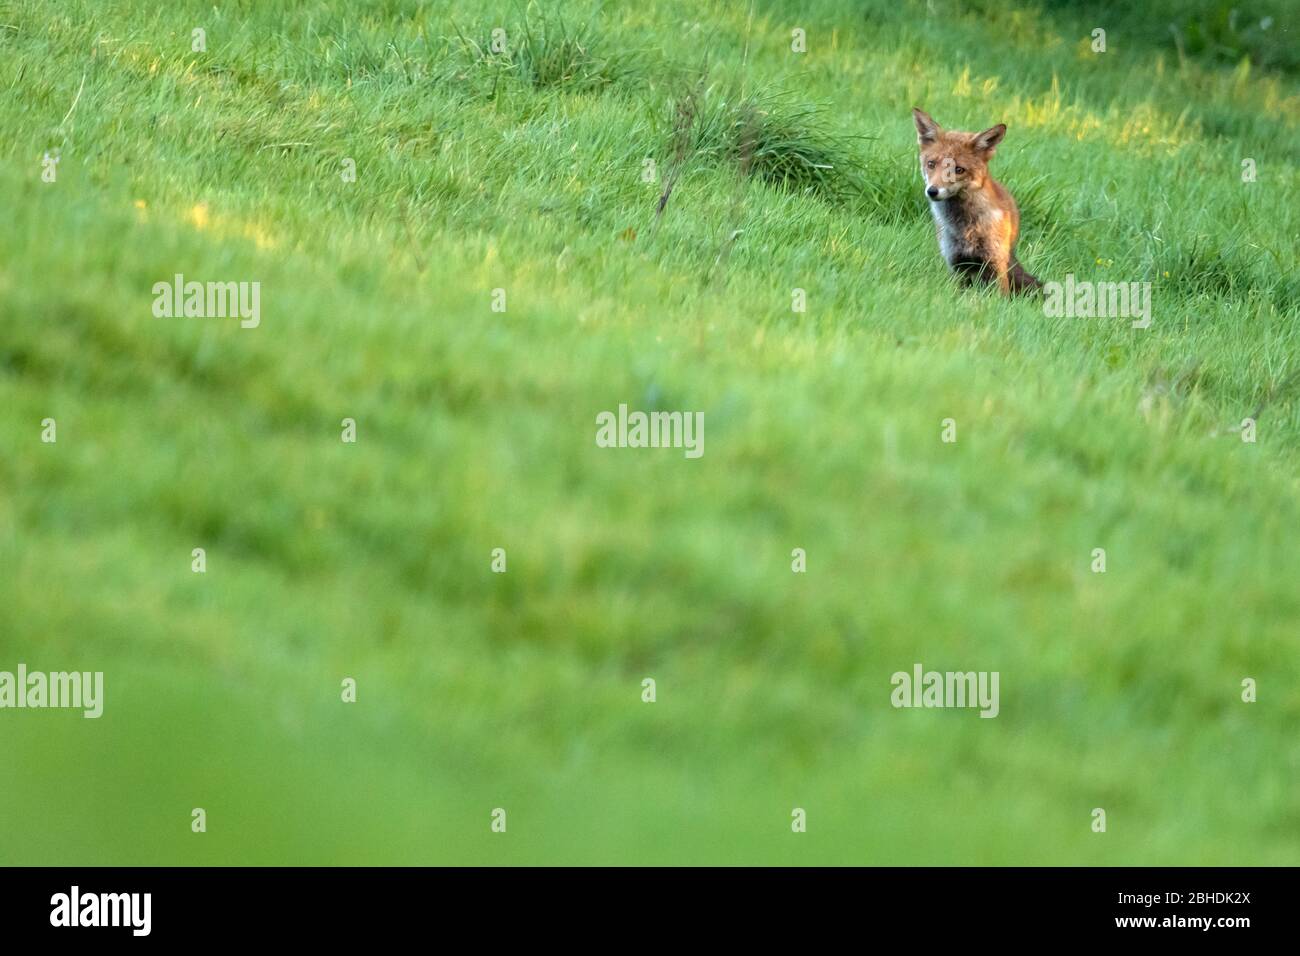 Red Fox walking through a lush green field Stock Photo